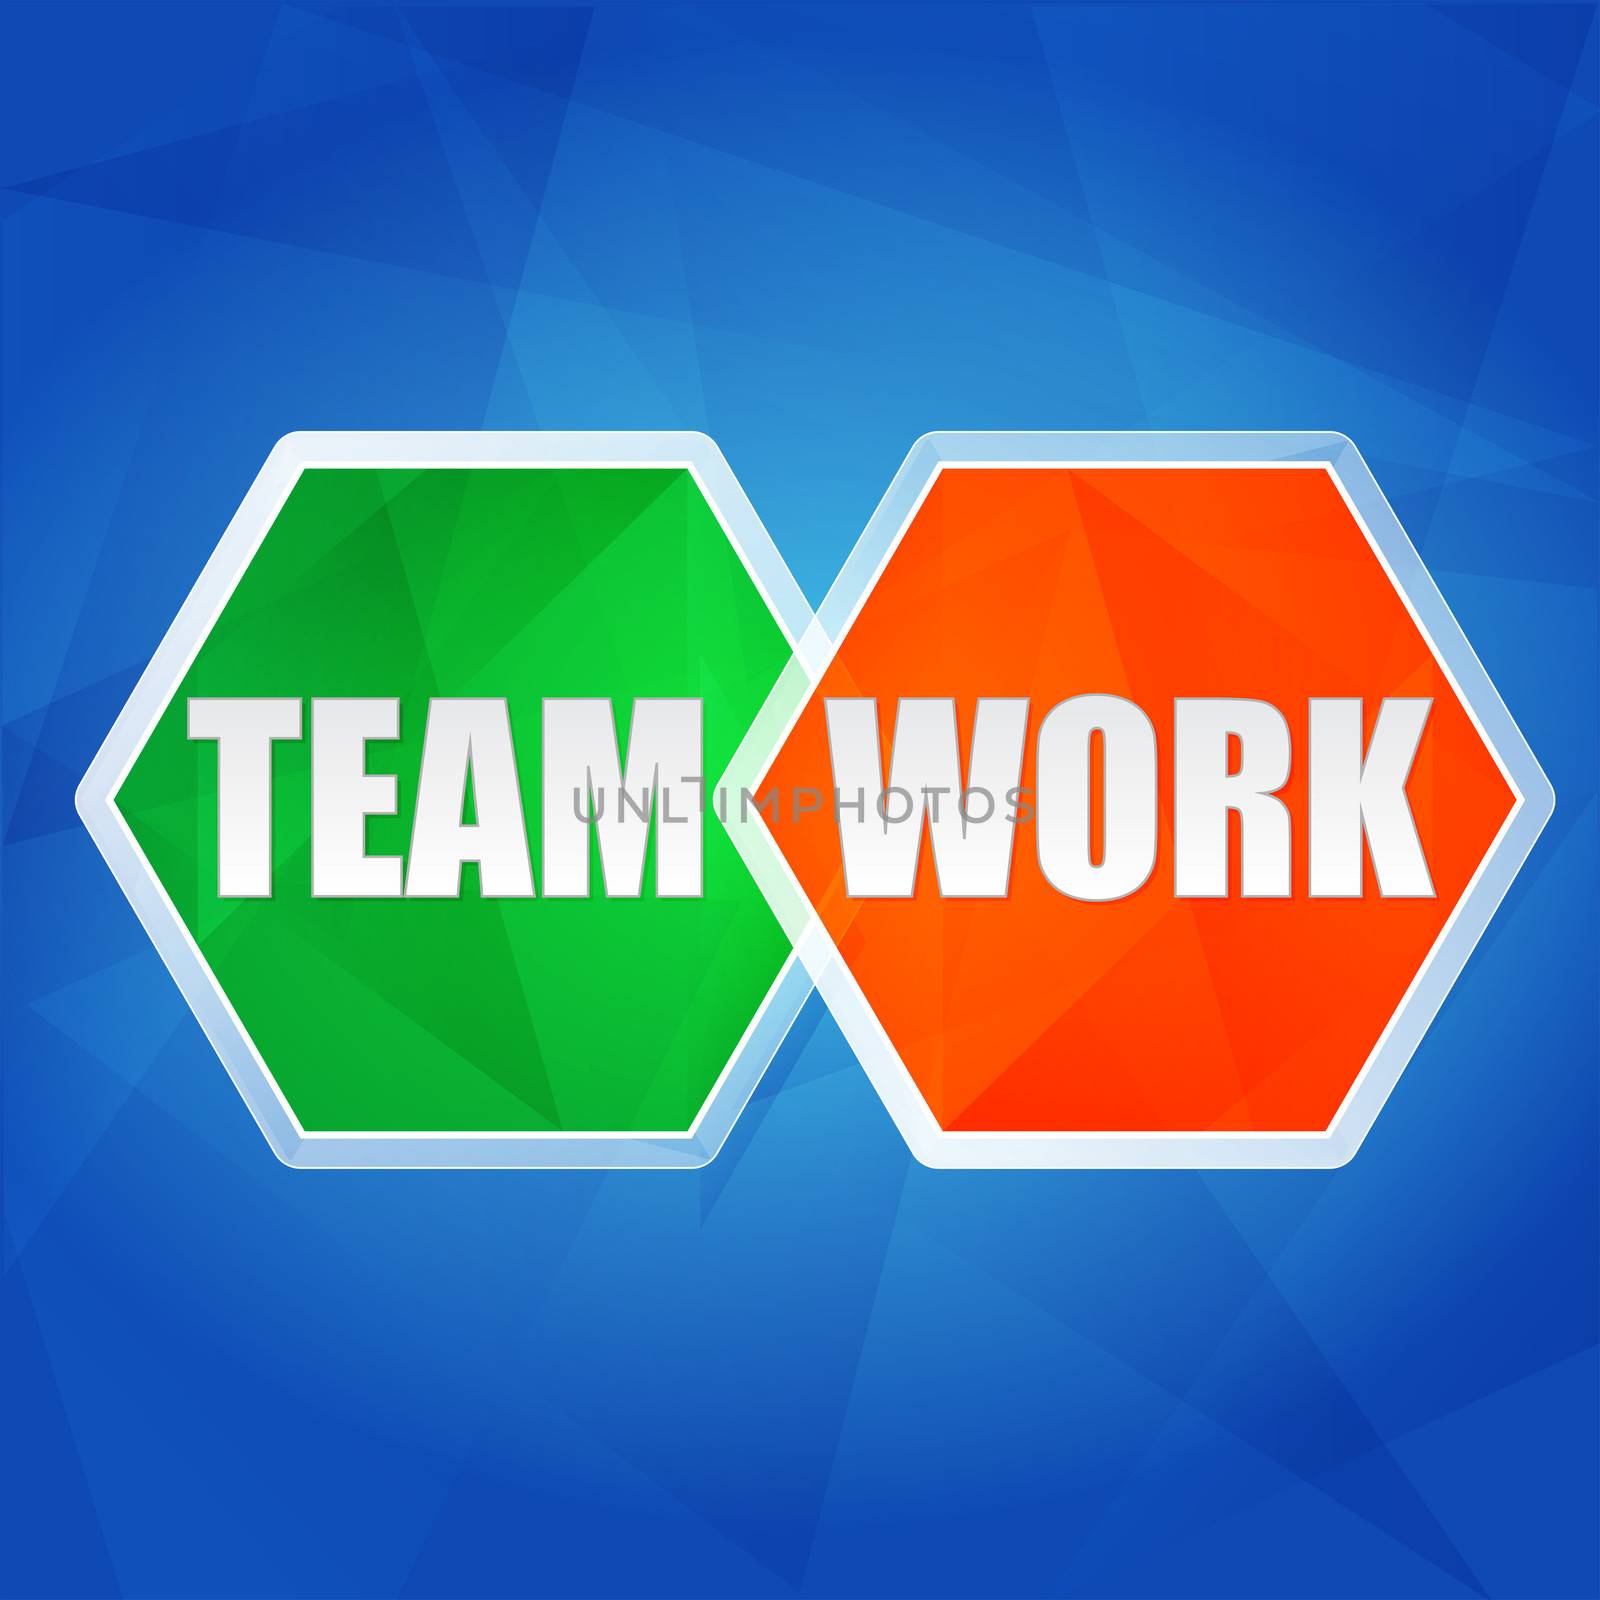 teamwork in color hexagons over blue background, flat design, business team building concept